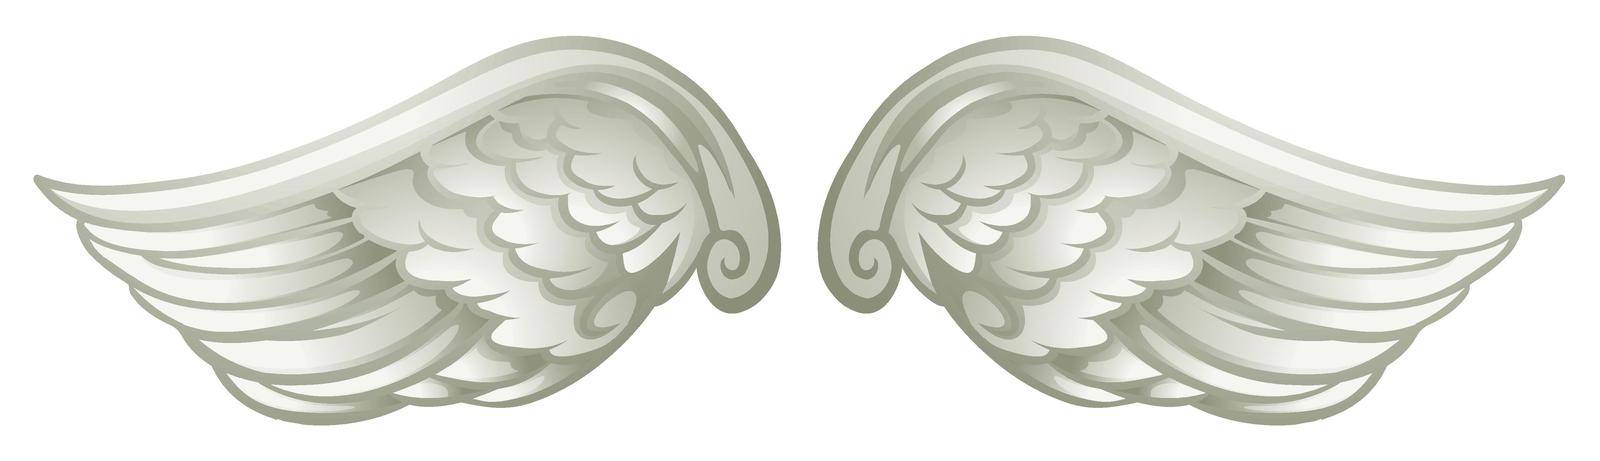 Pair of white wings illustration